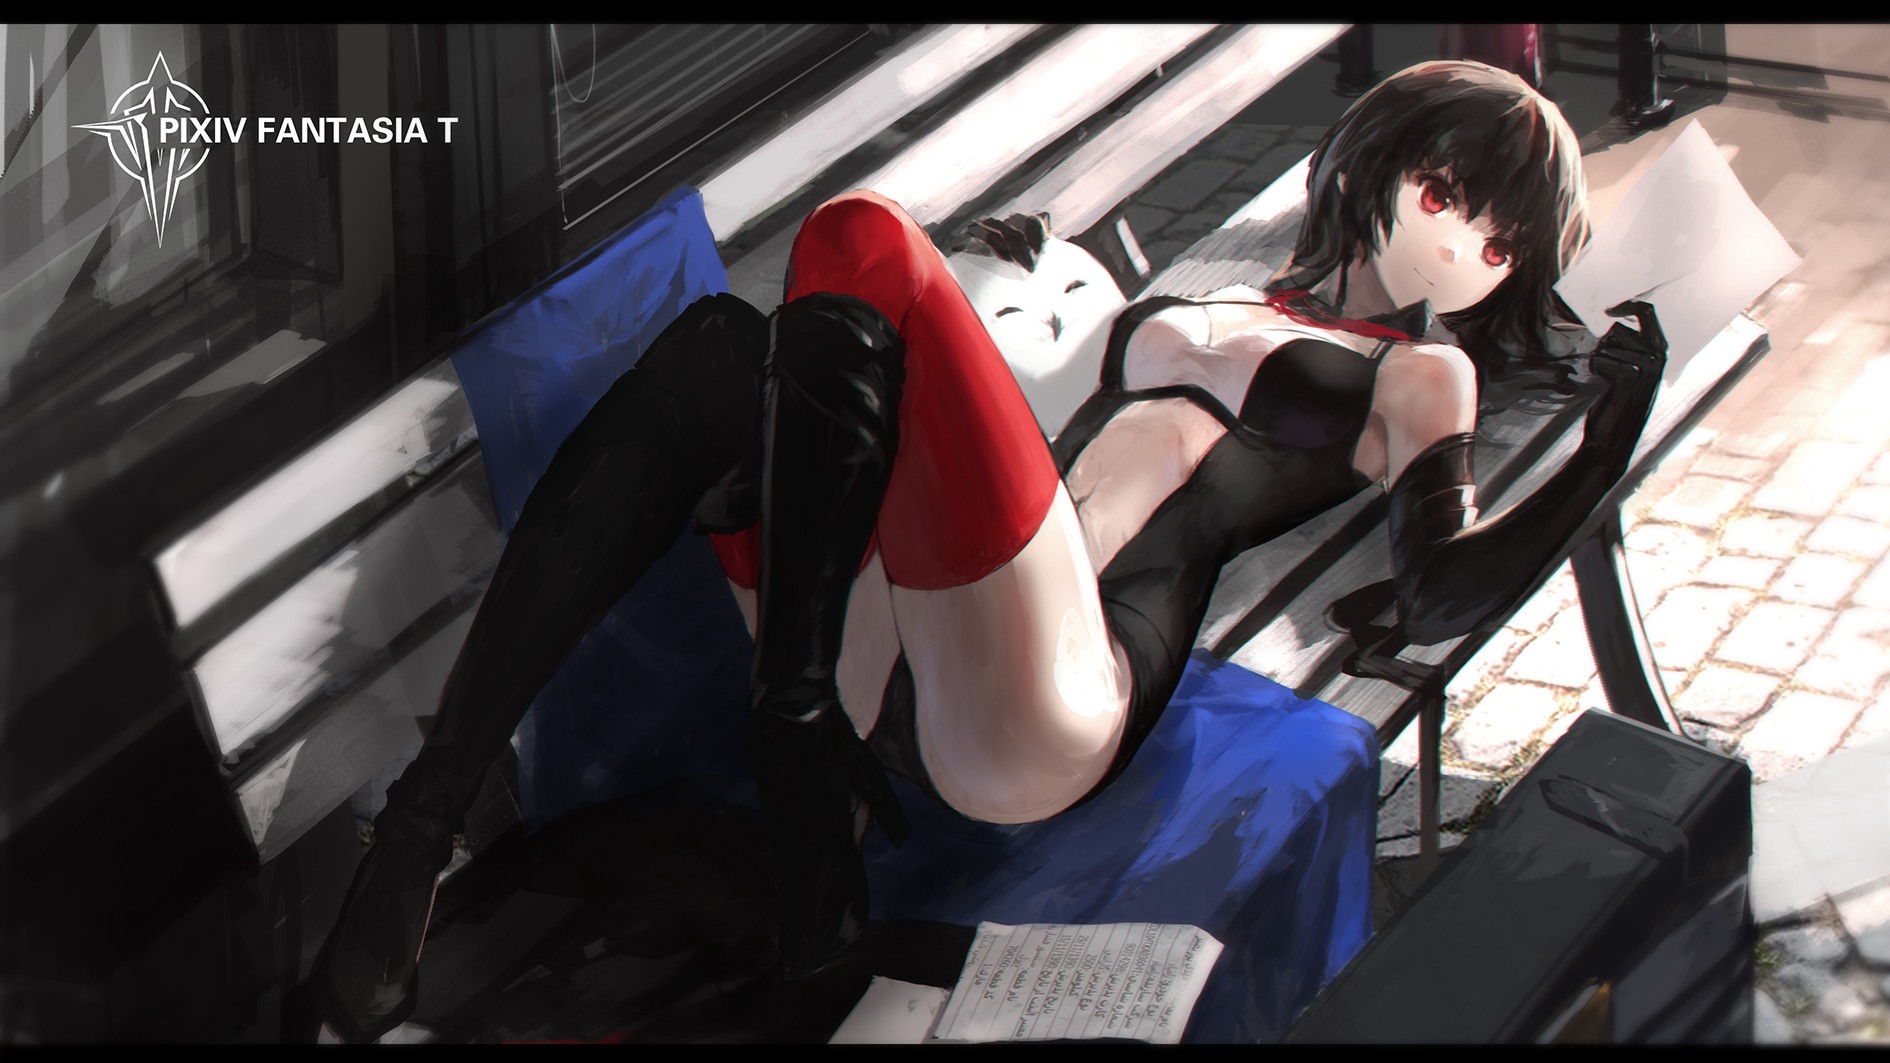 Anime 1890x1063 anime girls anime legs Swd3e2 Pixiv Fantasia stockings red stockings black hair red eyes lying on back Pixiv